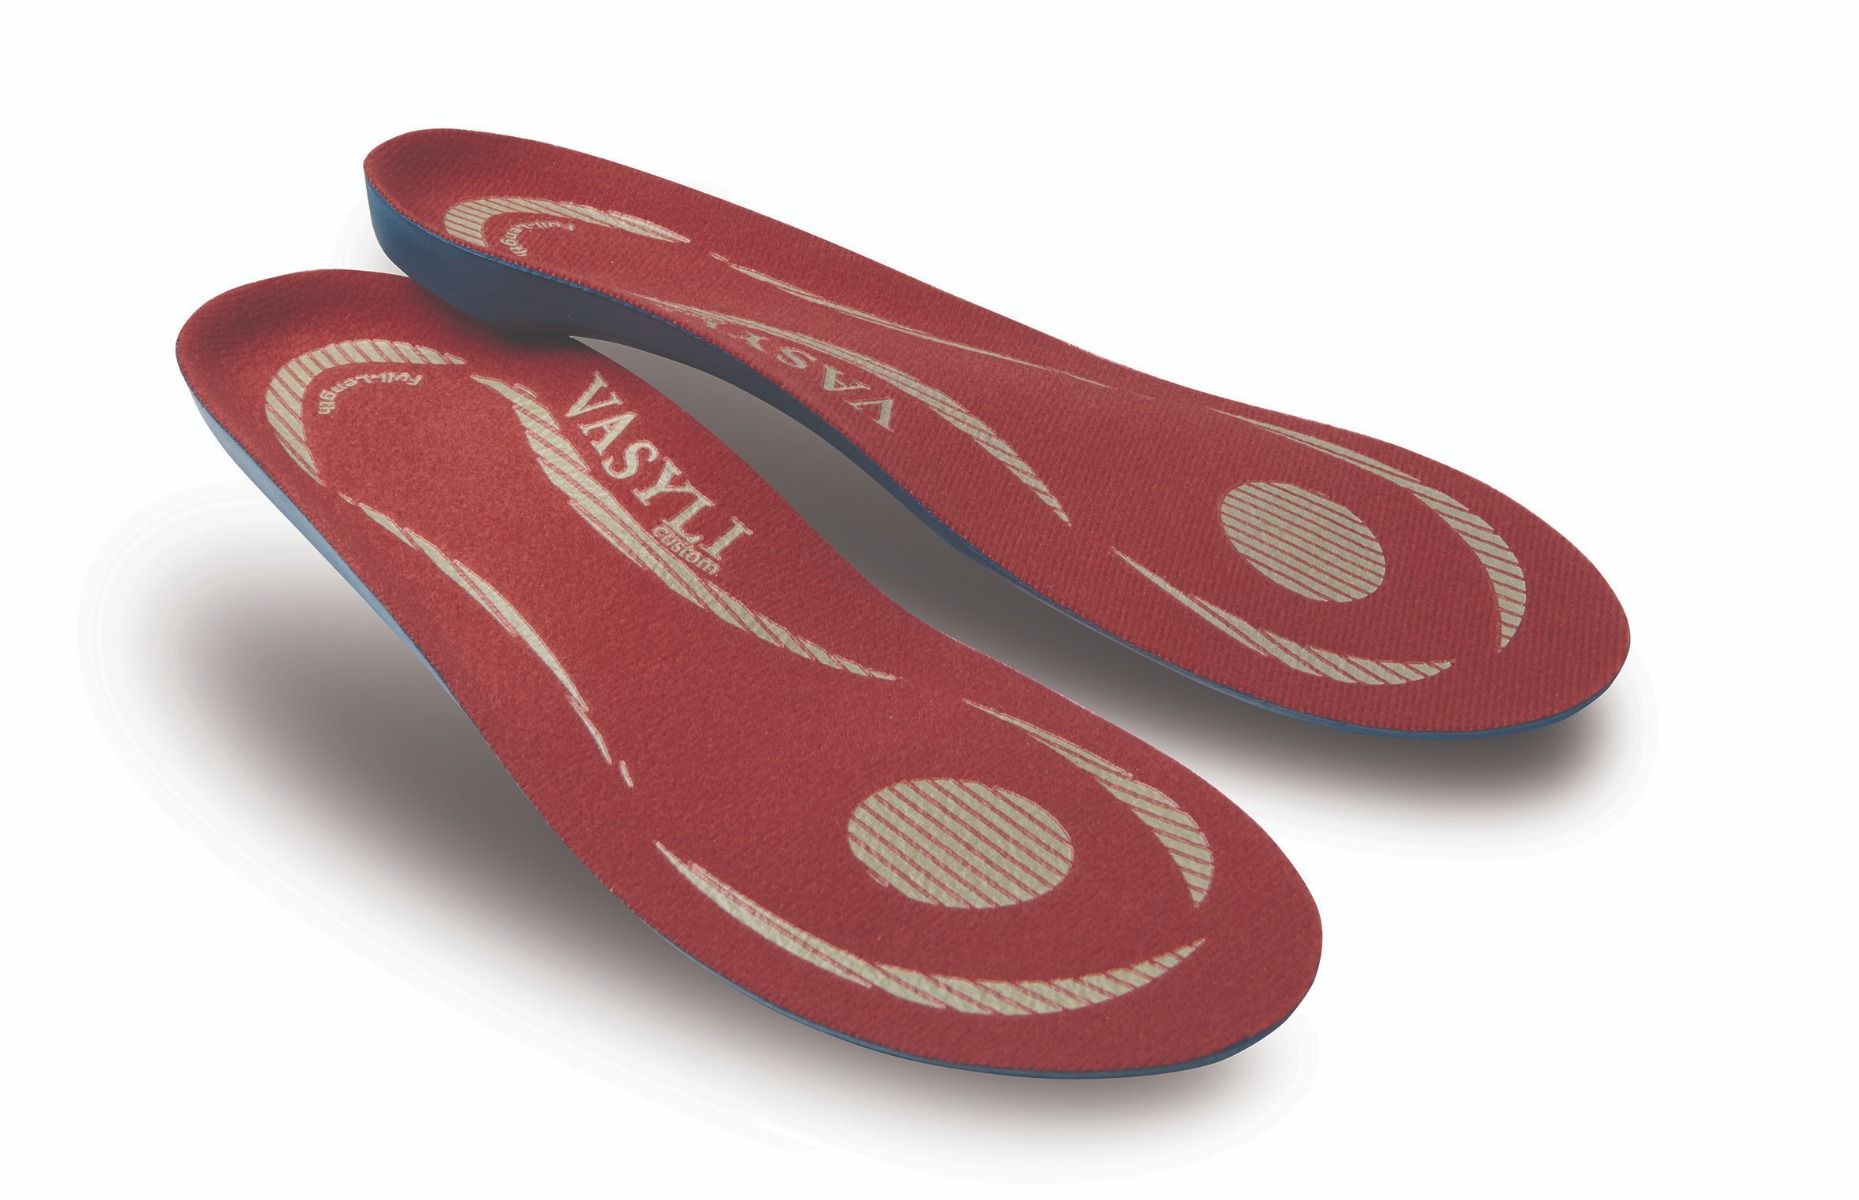 Red Vasyli Shock Absorber Orthotic shoe insert